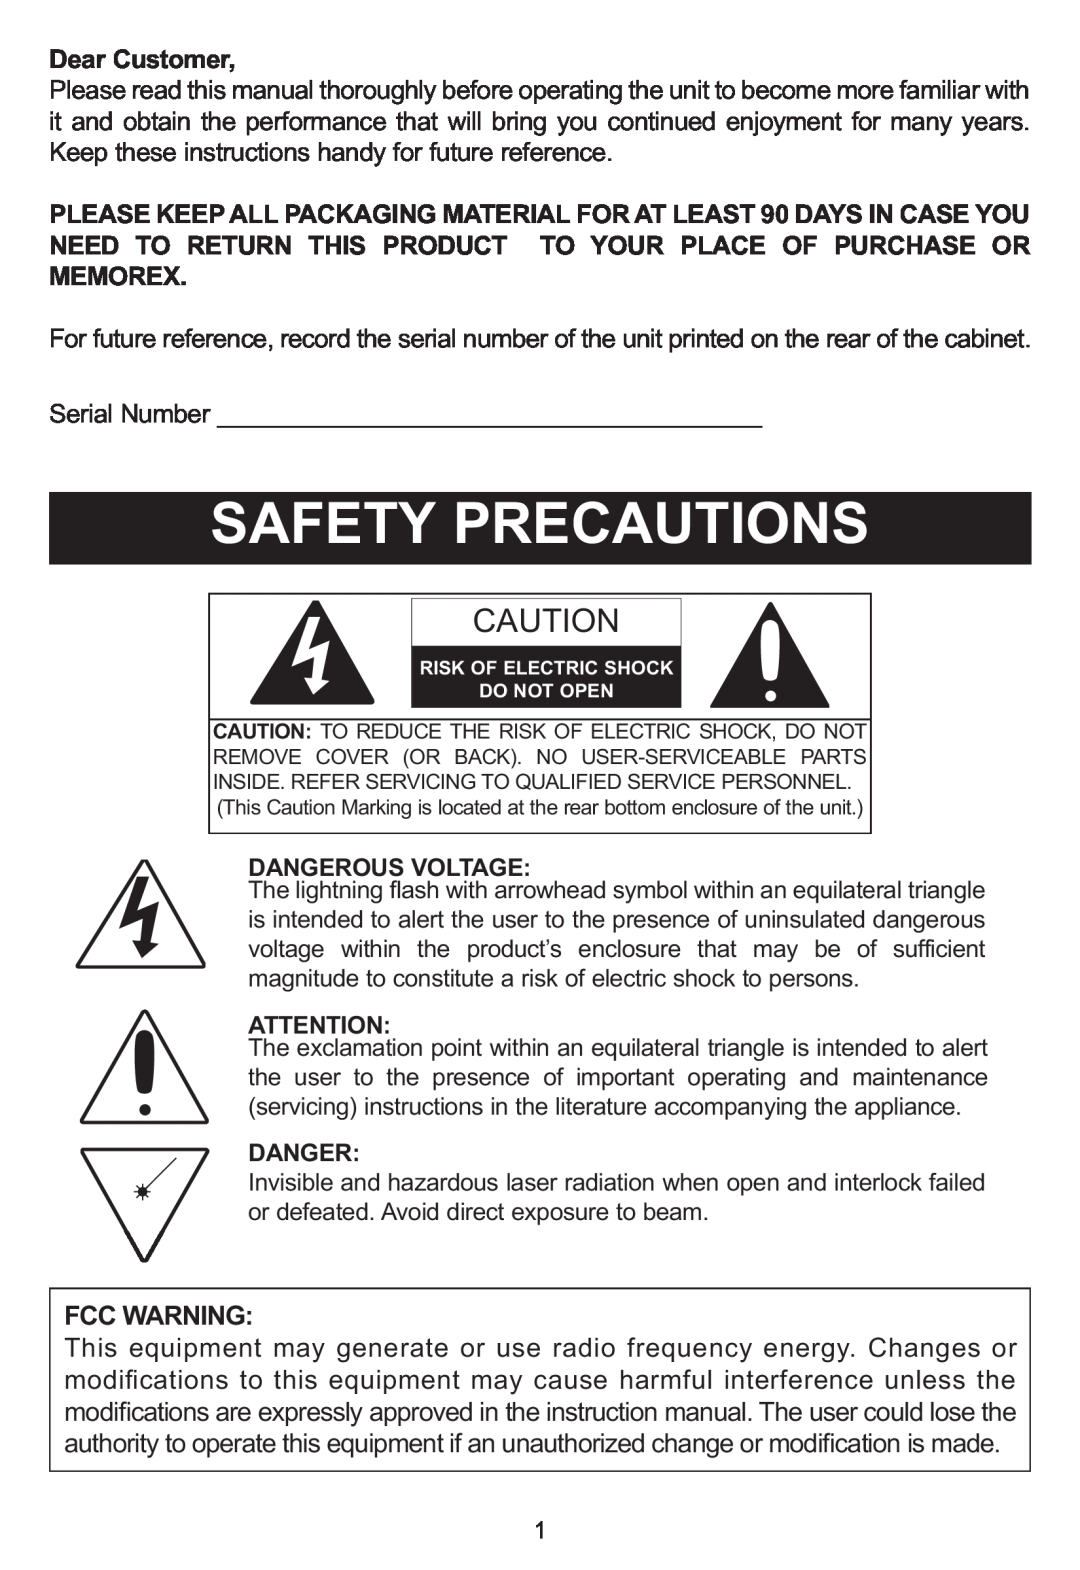 Memorex MP3848 manual Fcc Warning, Dangerous Voltage 